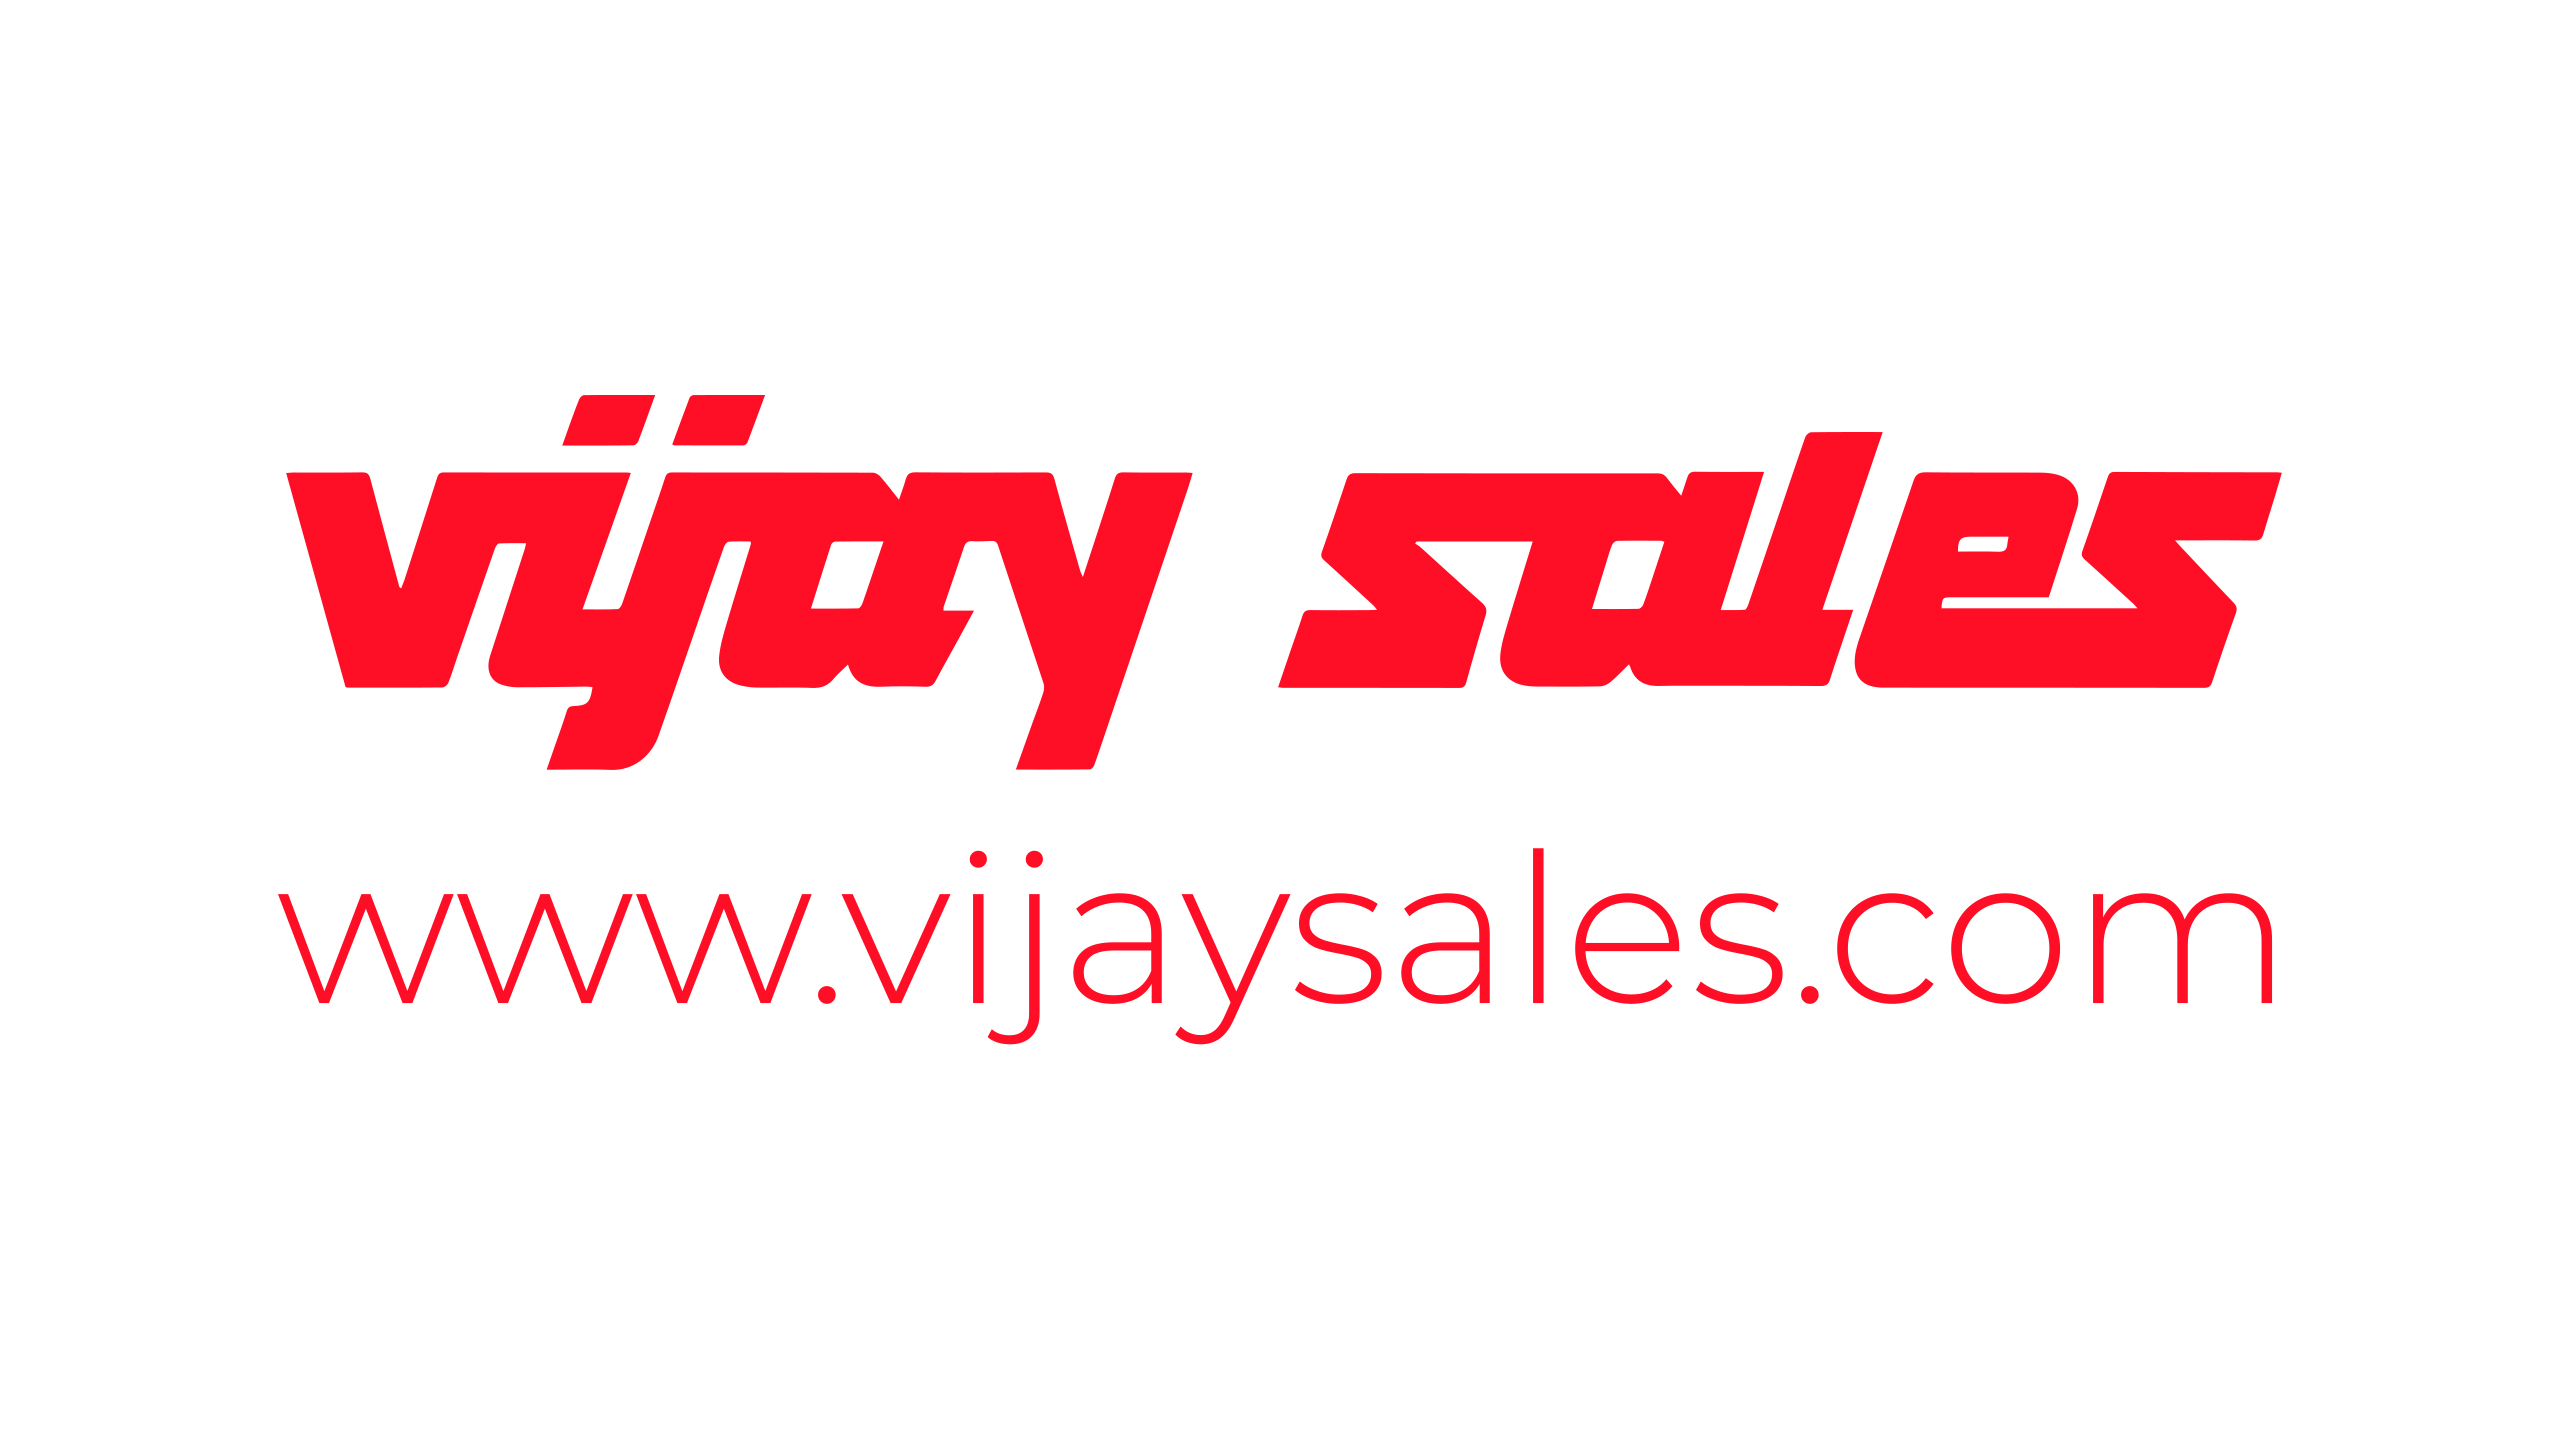 Vijay sales logo